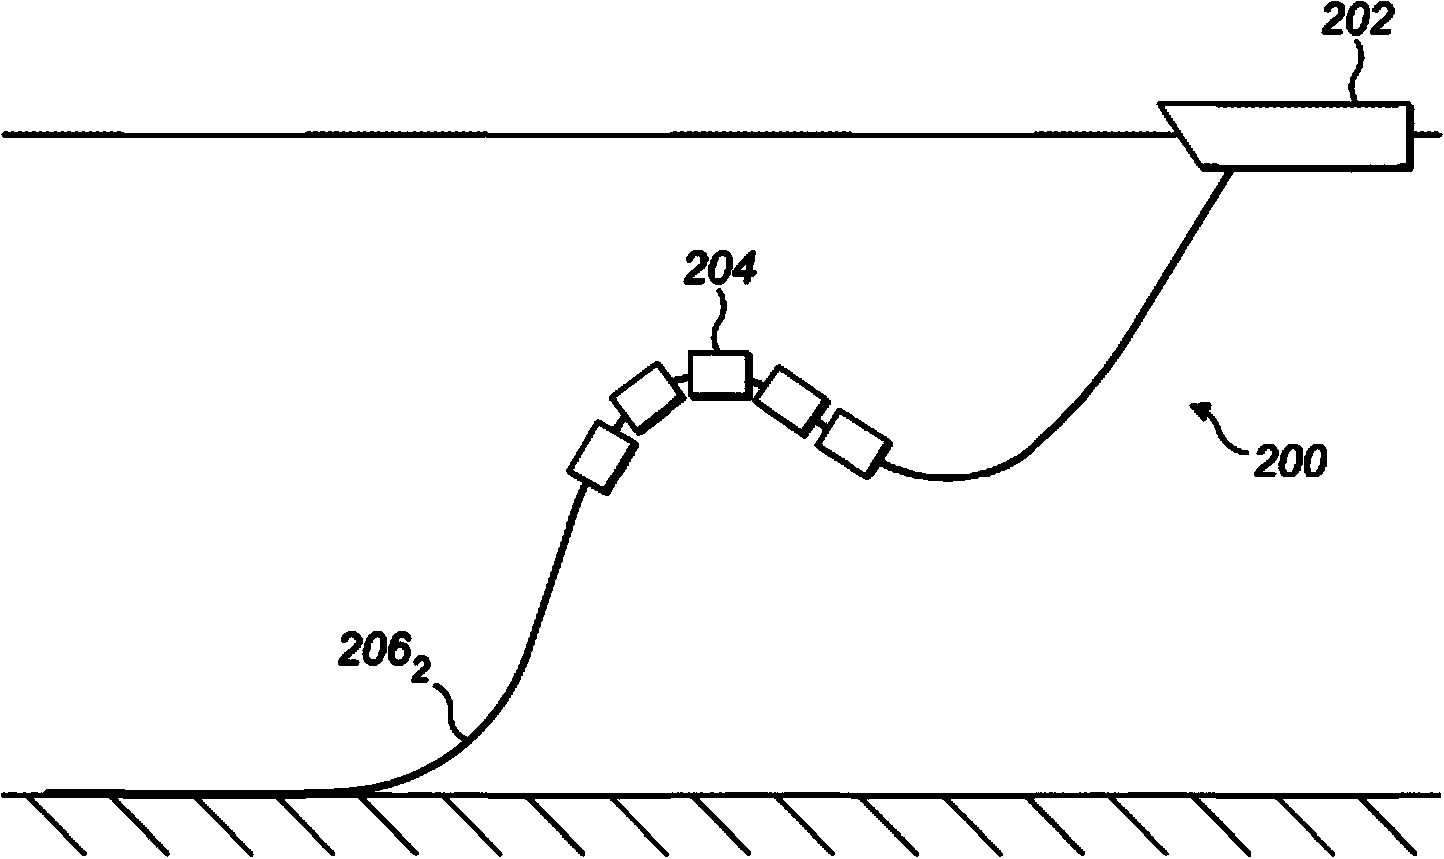 A buoyancy element, riser assembly including a buoyancy element and a method of supporting a riser